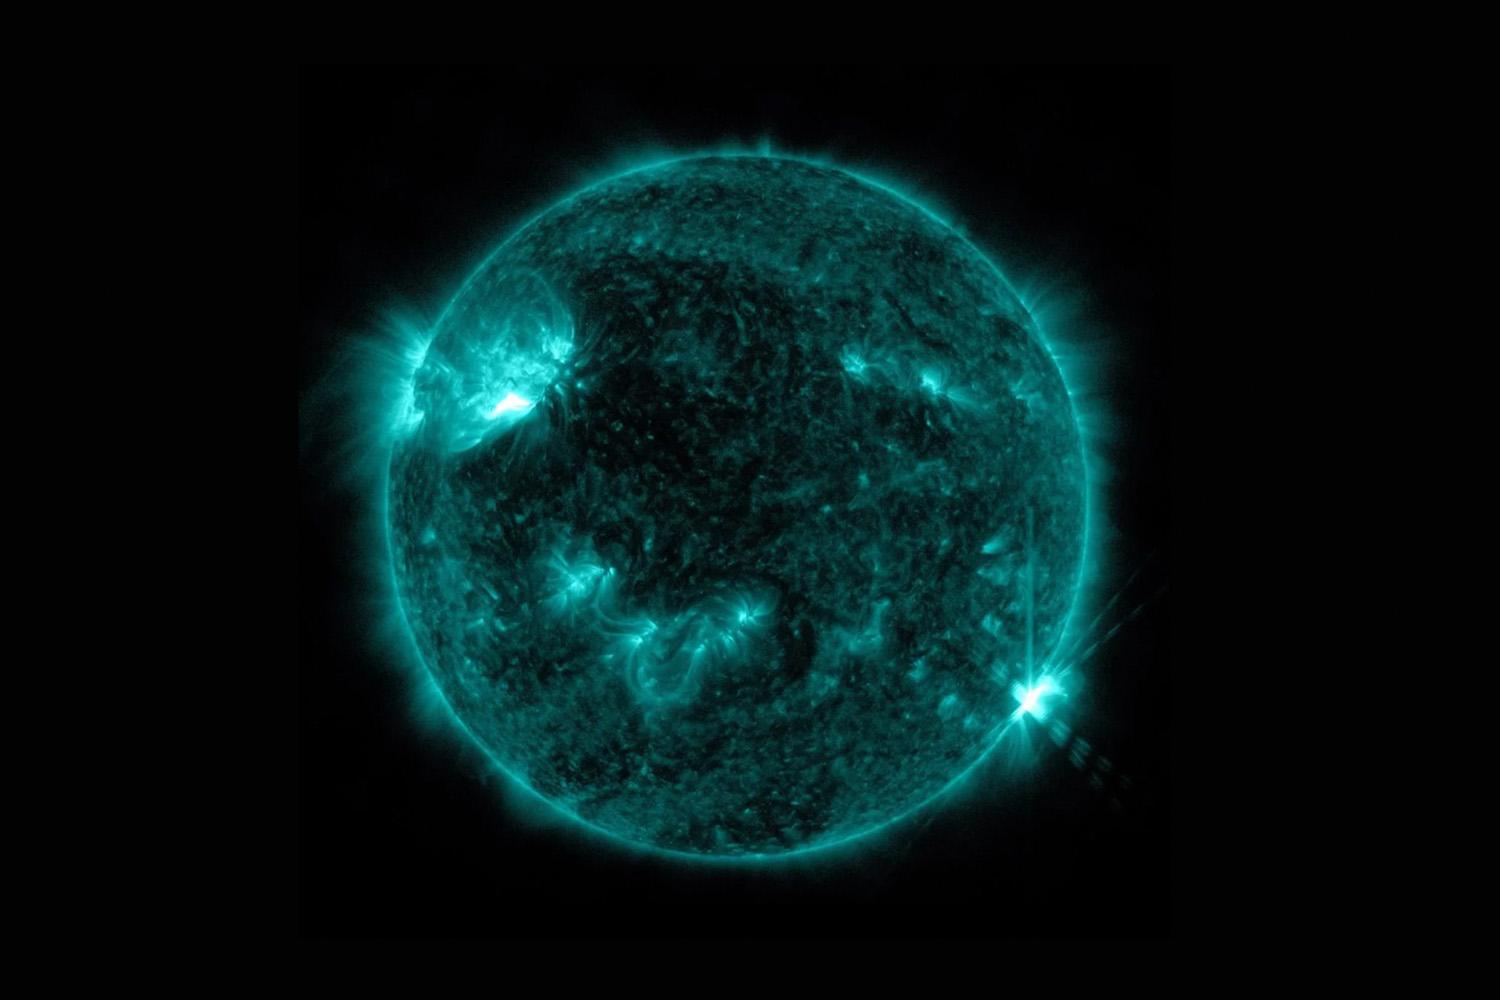 sun-blasted-out-4-eruptions-same-time-plasma-hurtling-toward-earth-SPACEBAR-Hero.jpg